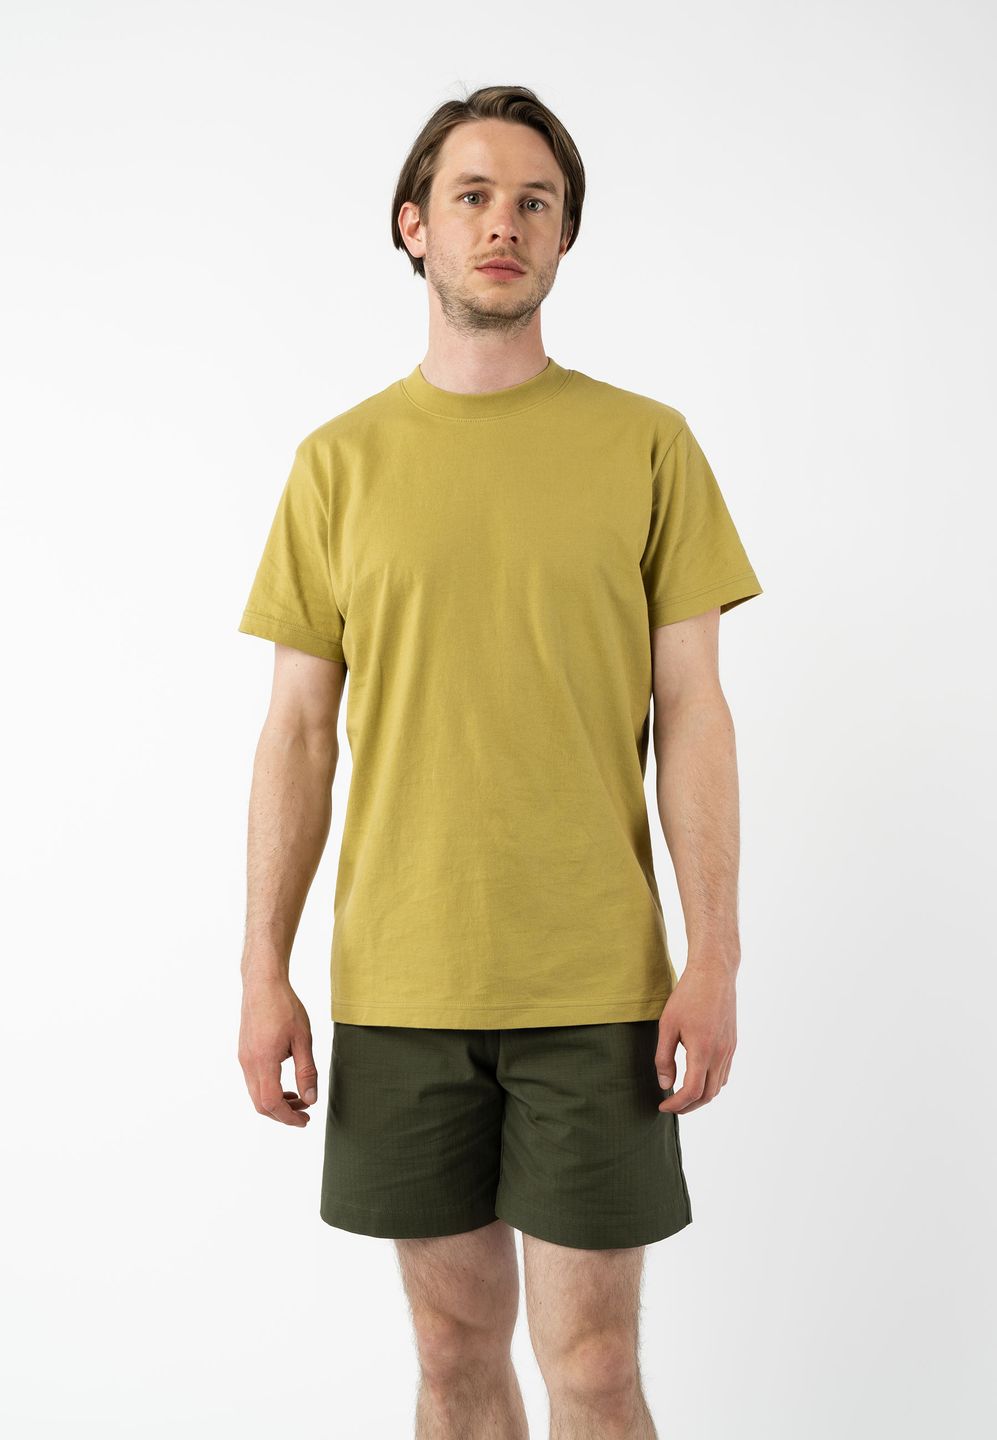 T-Shirt Avan khaki von Melawear